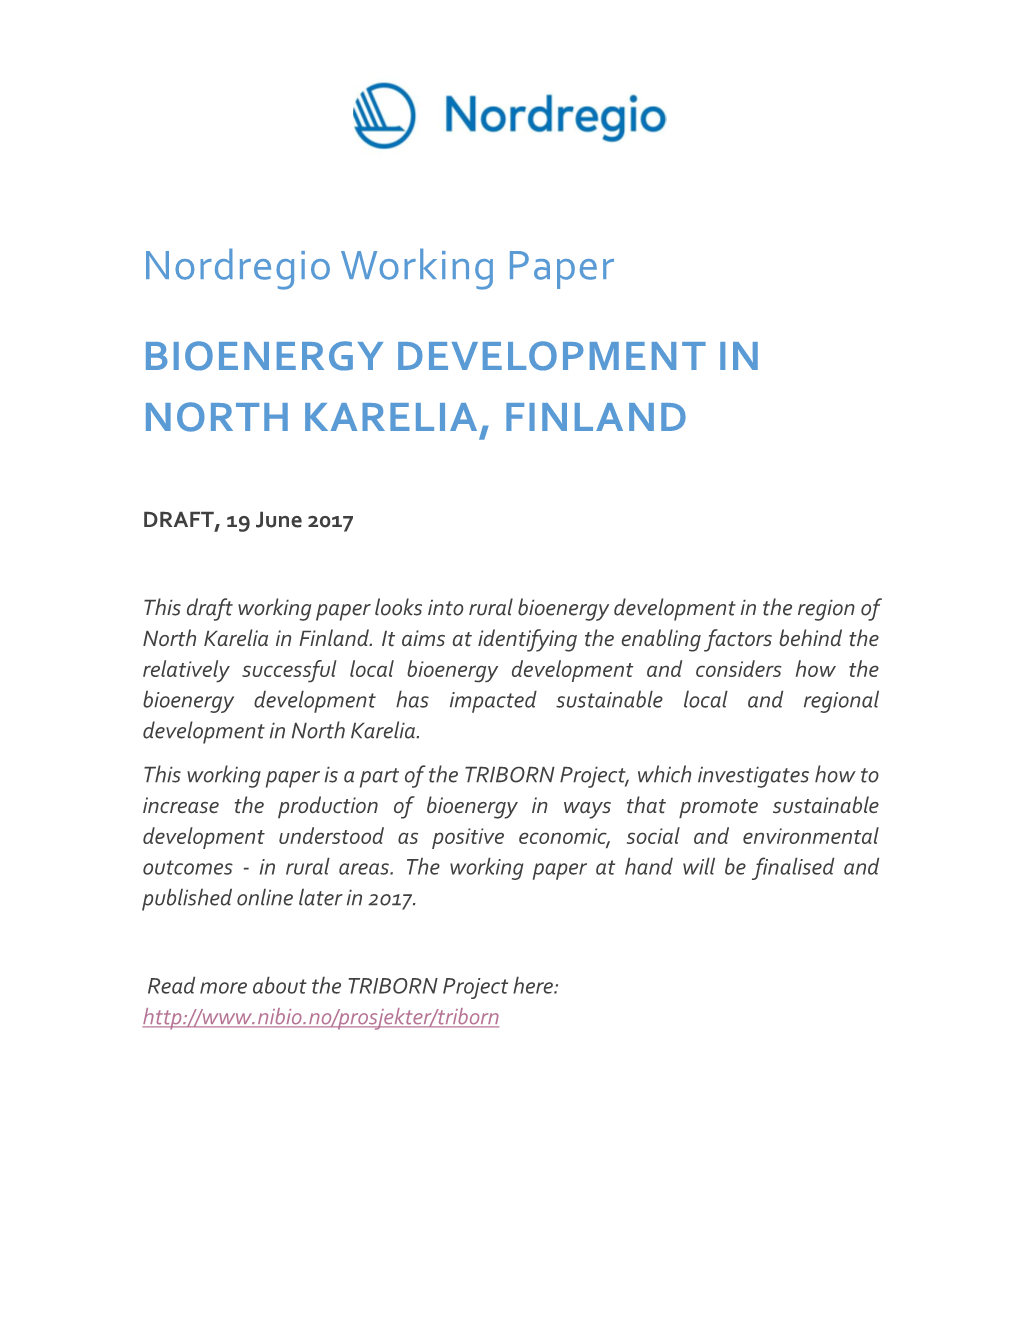 Bioenergy Development in North Karelia, Finland Nelly Mikkola